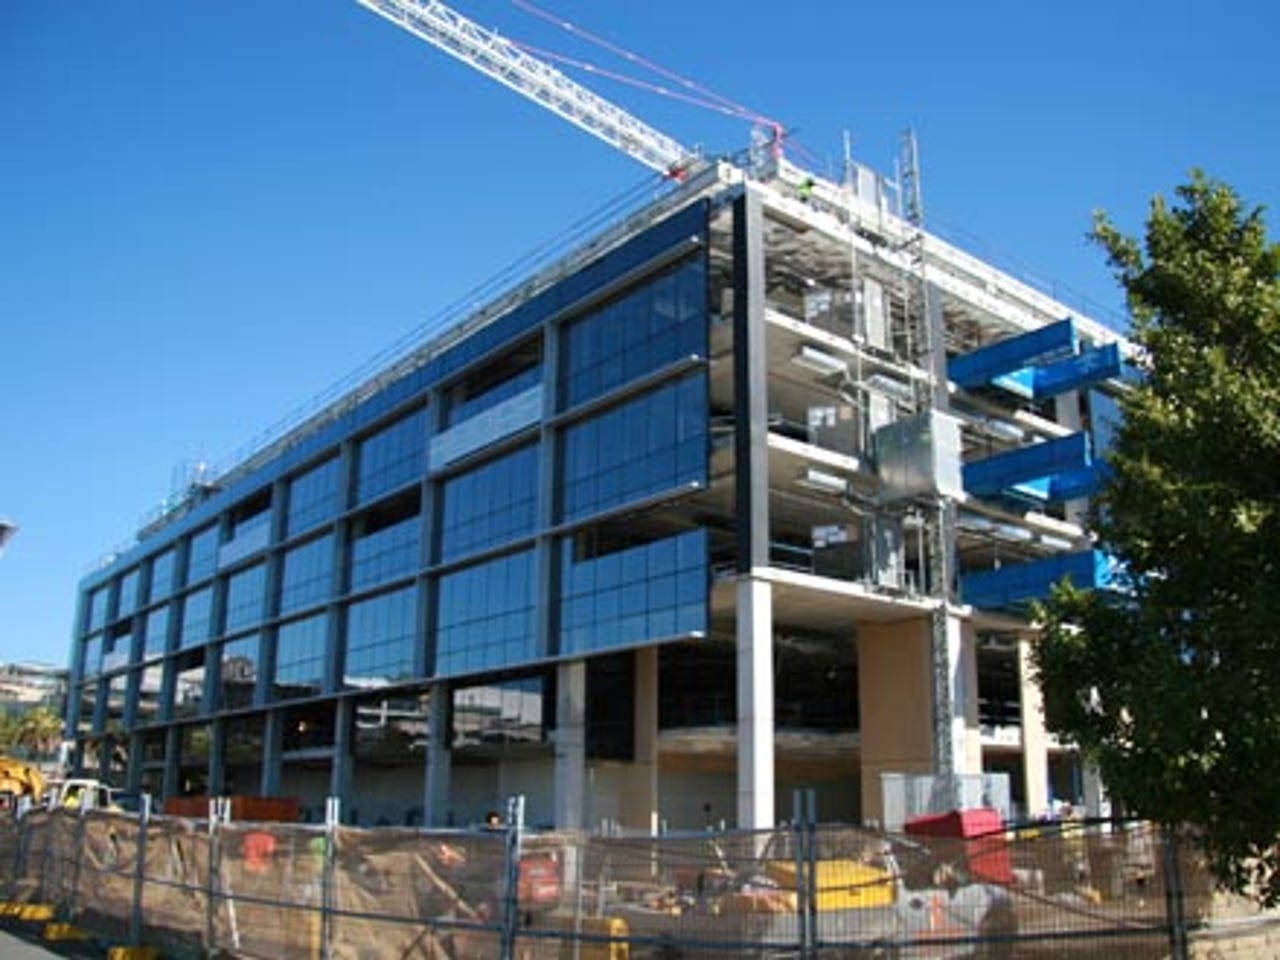 photos-sydney-googleplex-under-construction12.jpg